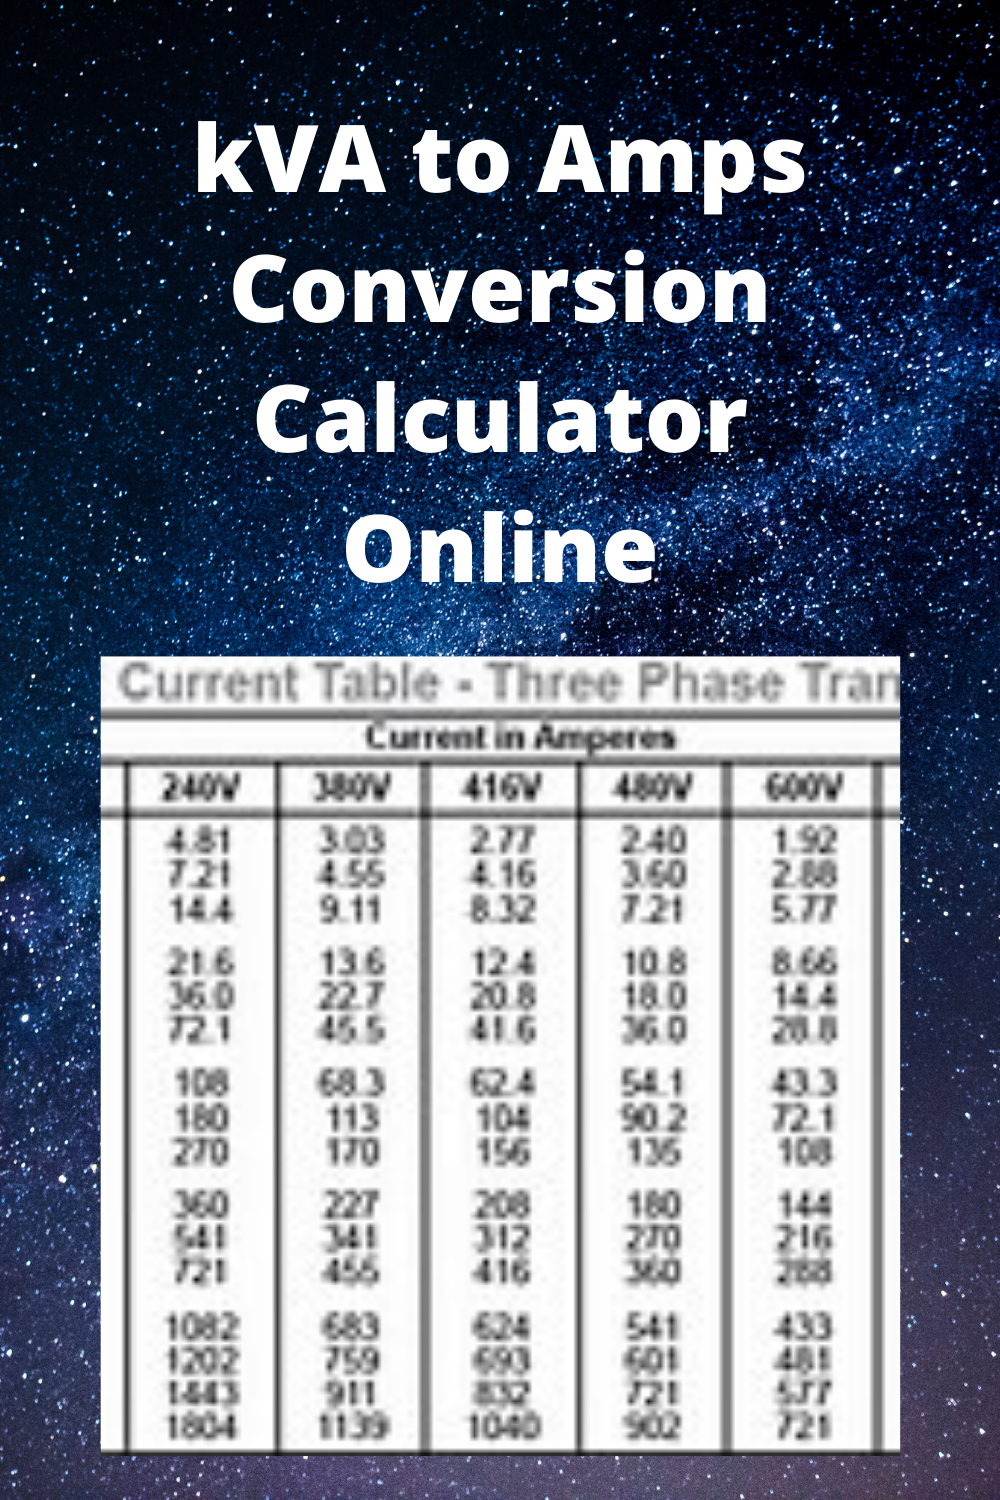 kva-to-amps-conversion-calculator-online-easy-rapid-calcs